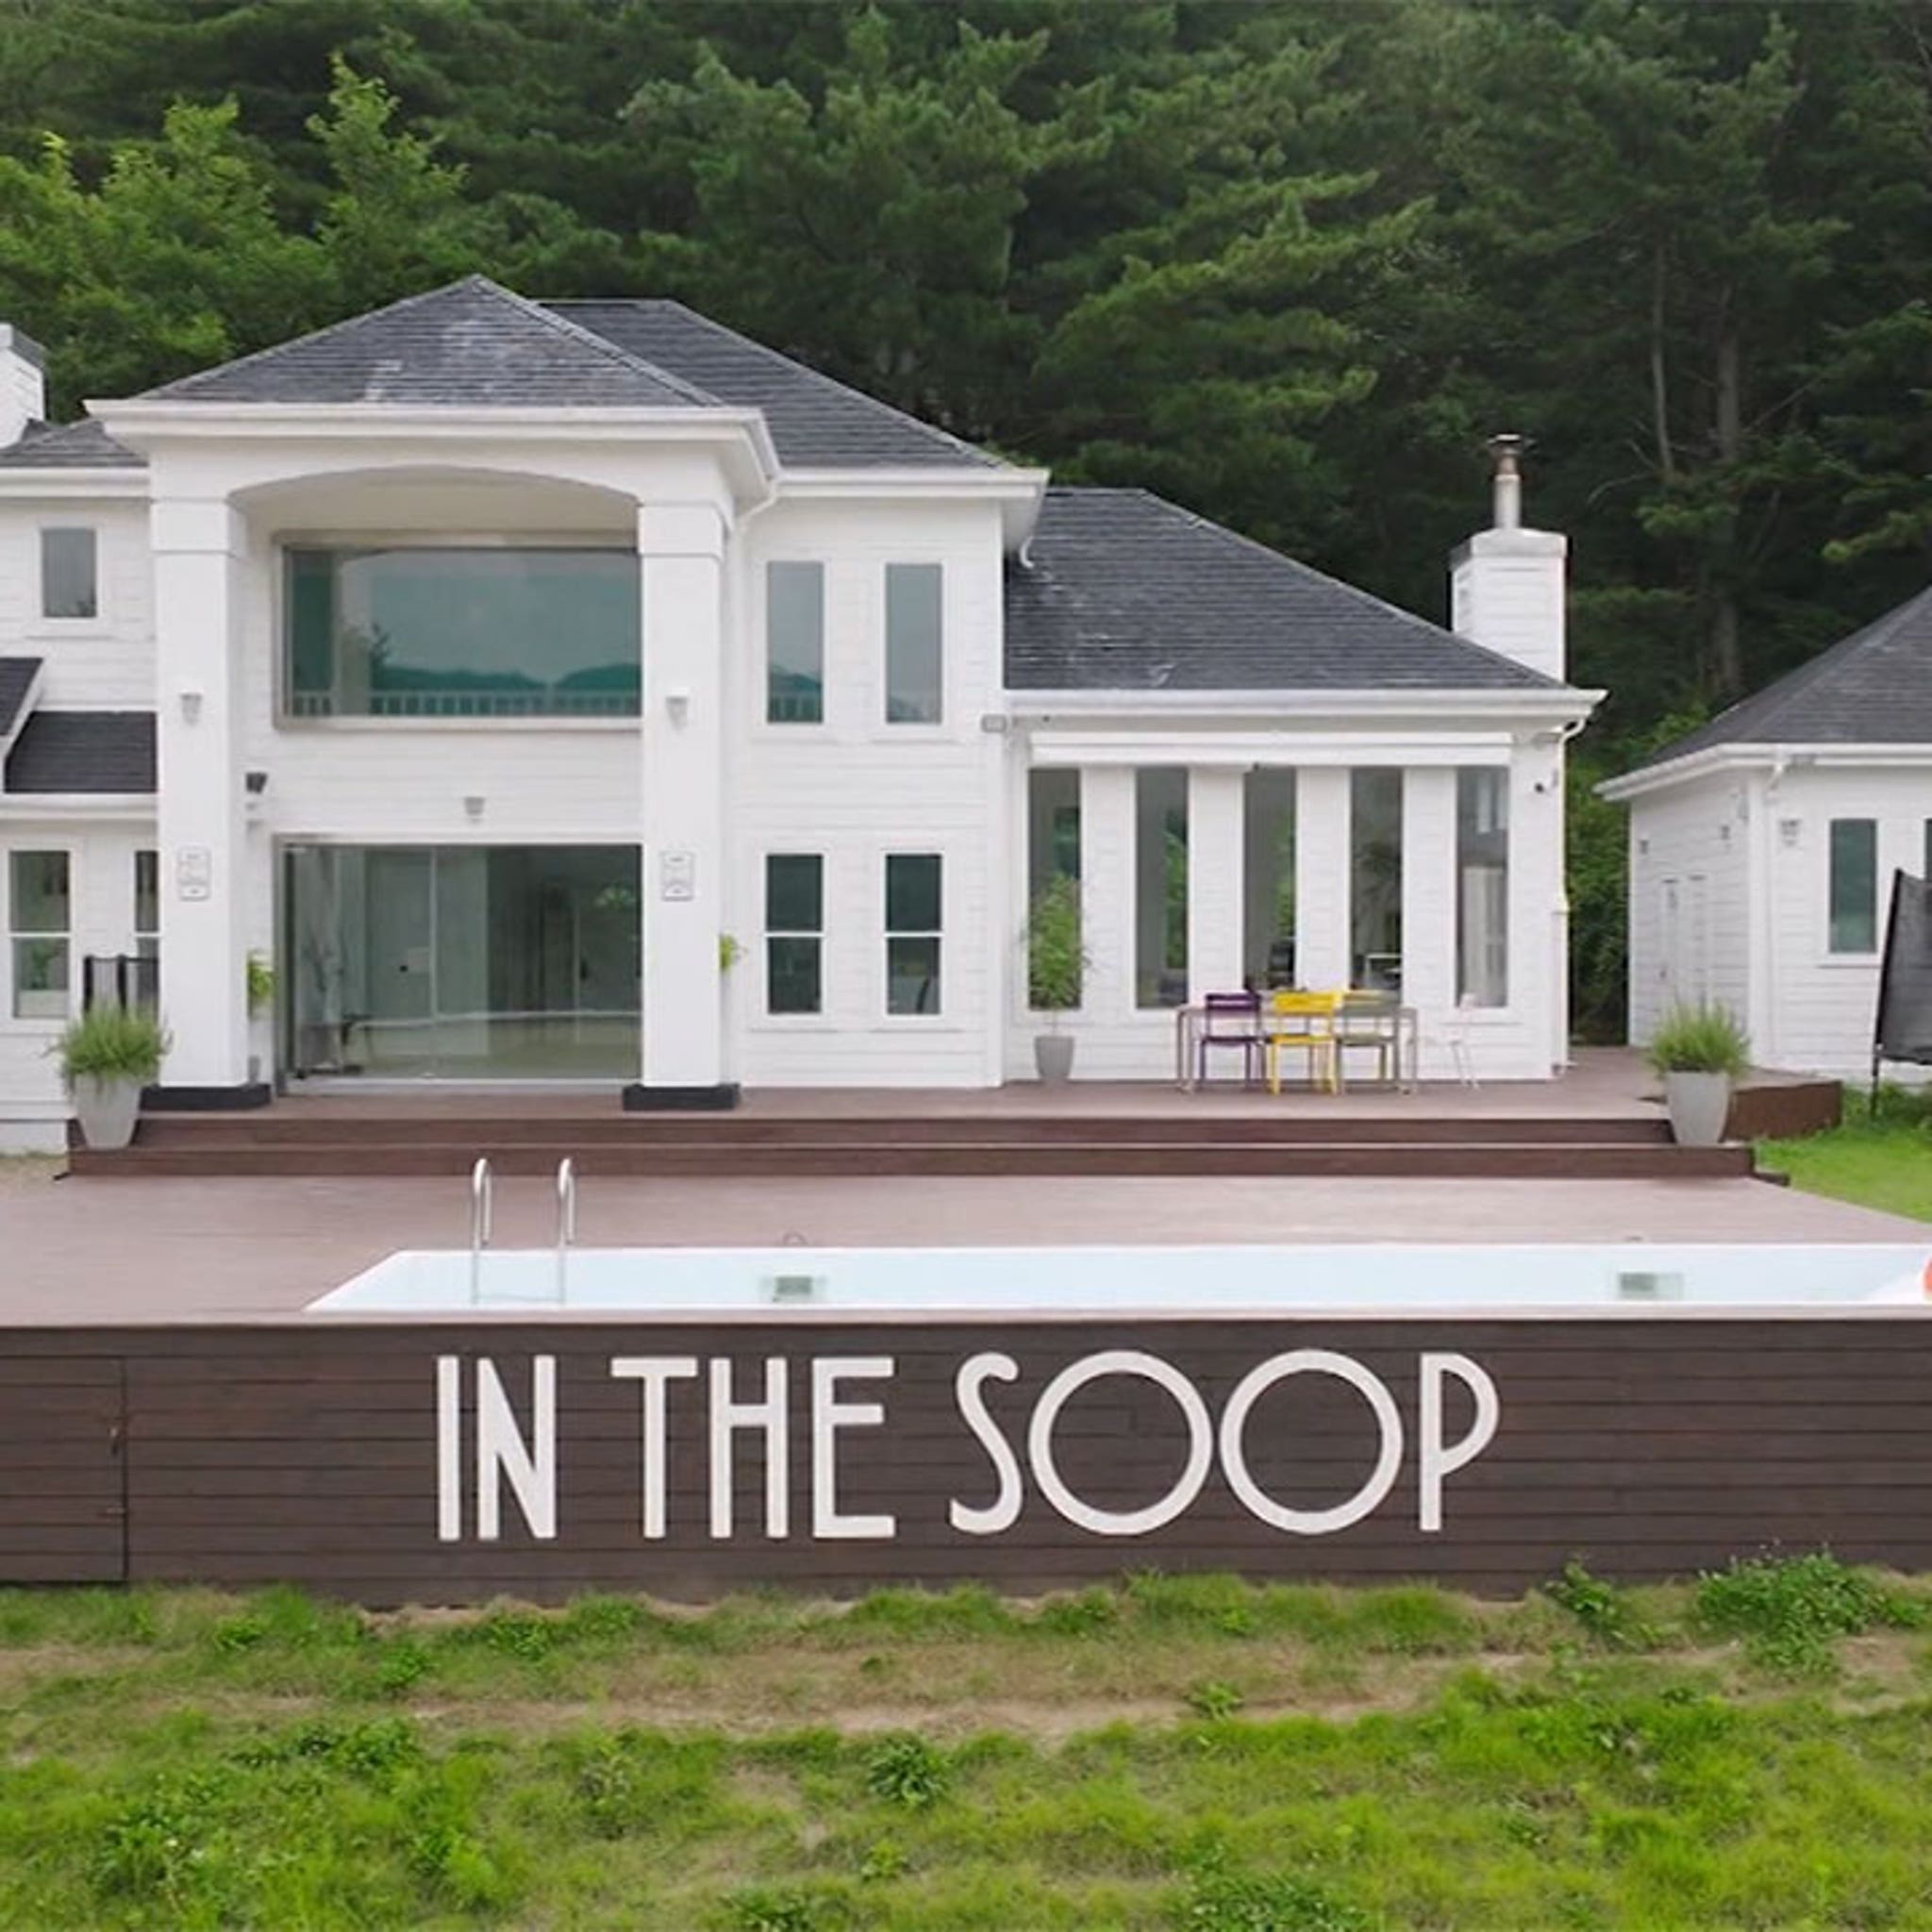 BTS' 'In The Soop' House Is On Airbnb & Blackpink To Drop Video